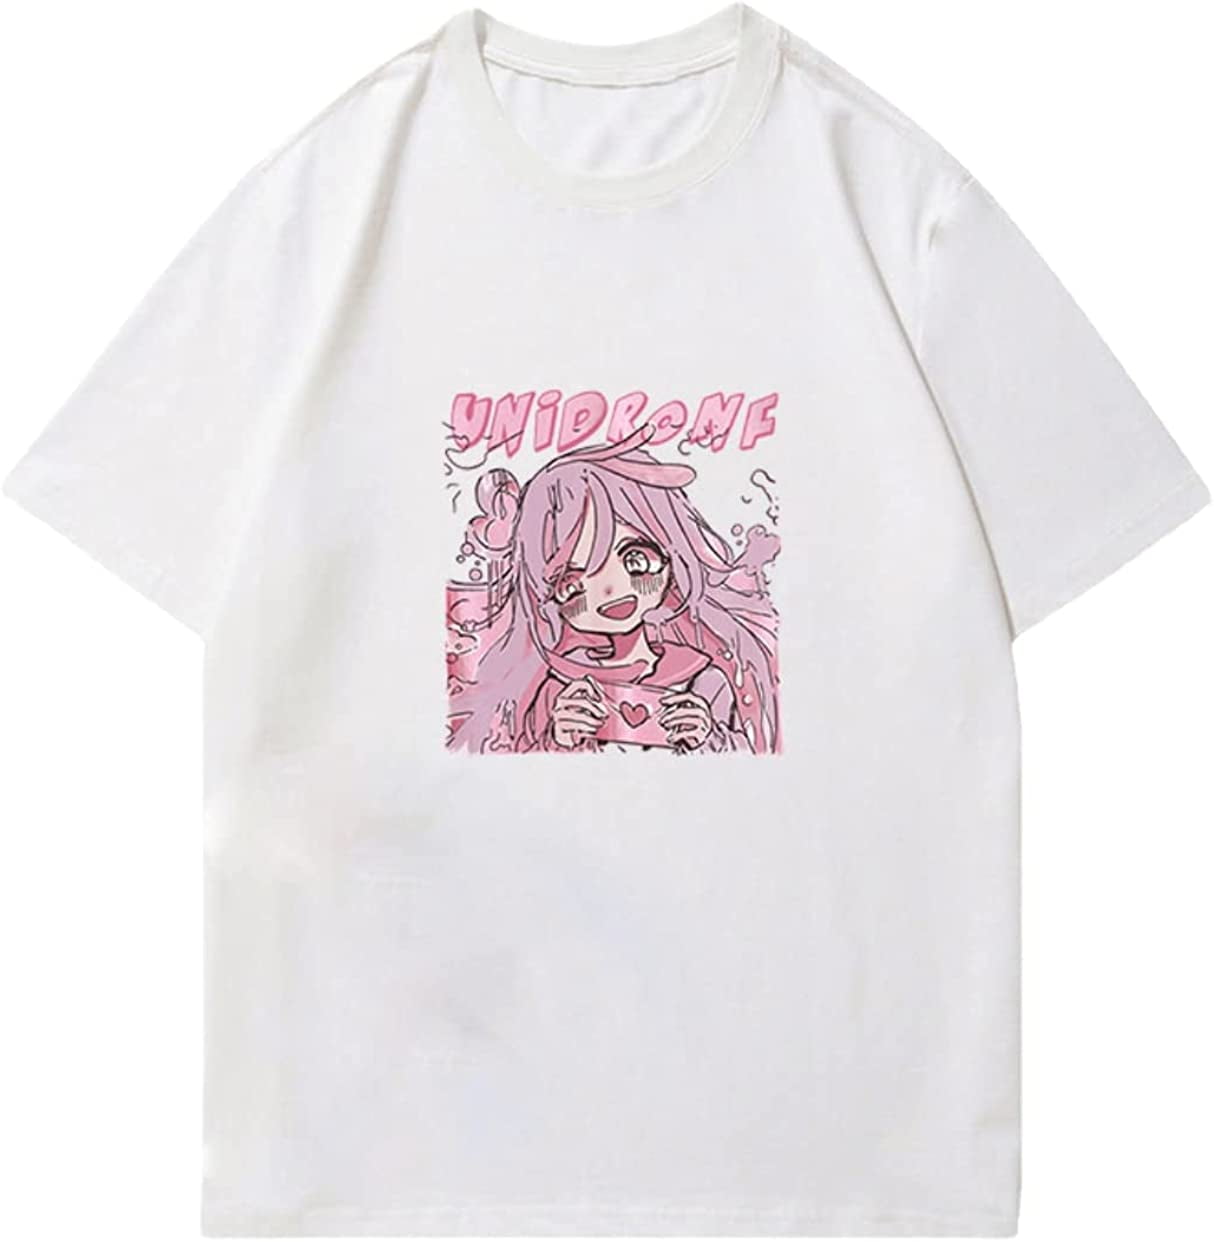 Pibes Chorros Classic T-Shirt Anime t-shirt Short t-shirt Men's clothing  kawaii clothes - AliExpress